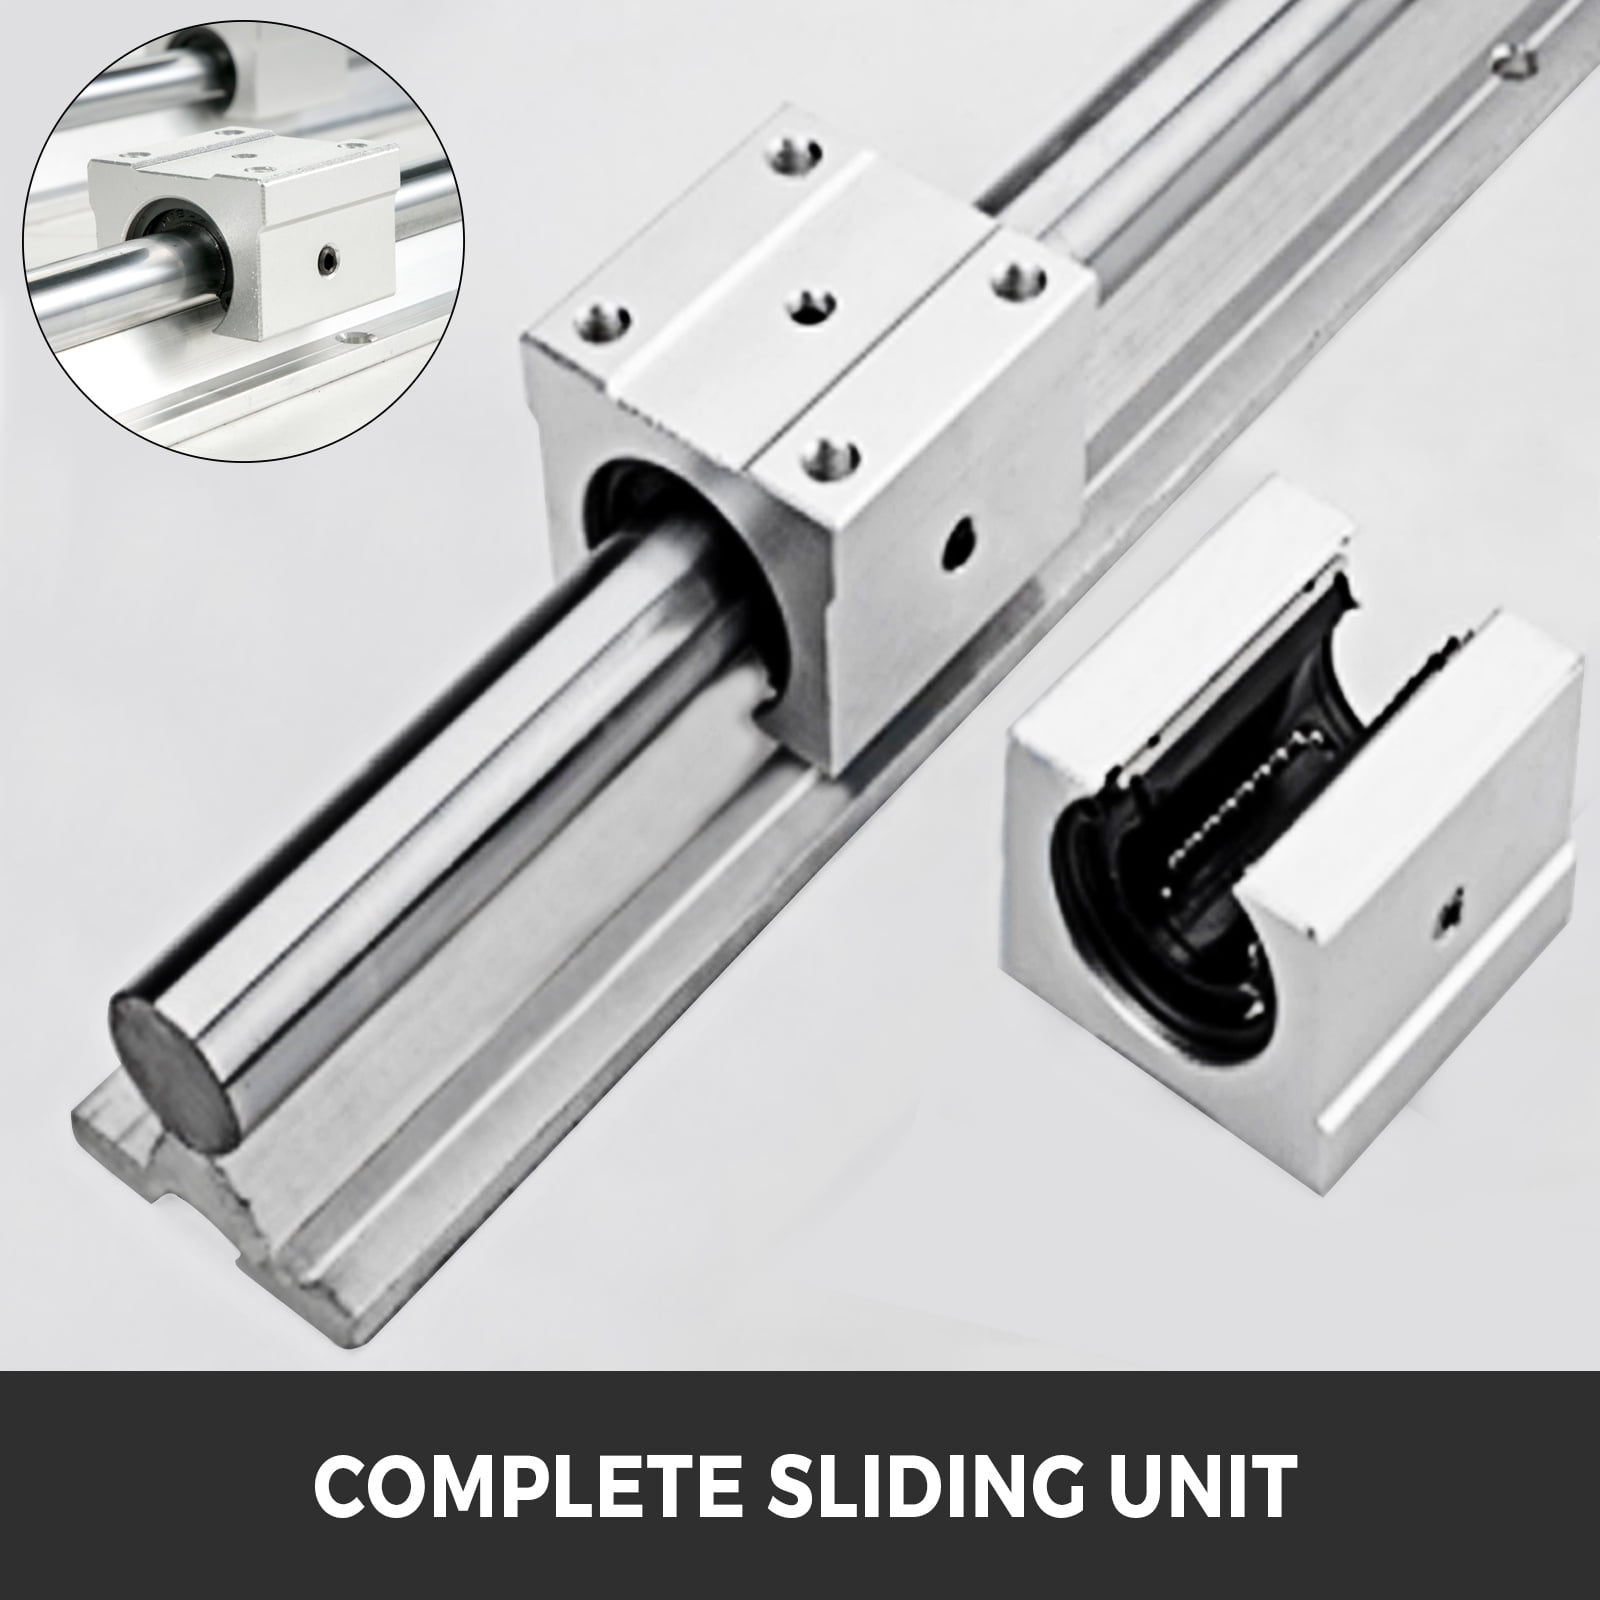 linear guides rails bearing slide rails SBR12-1000mm 2rails+4 blocks 